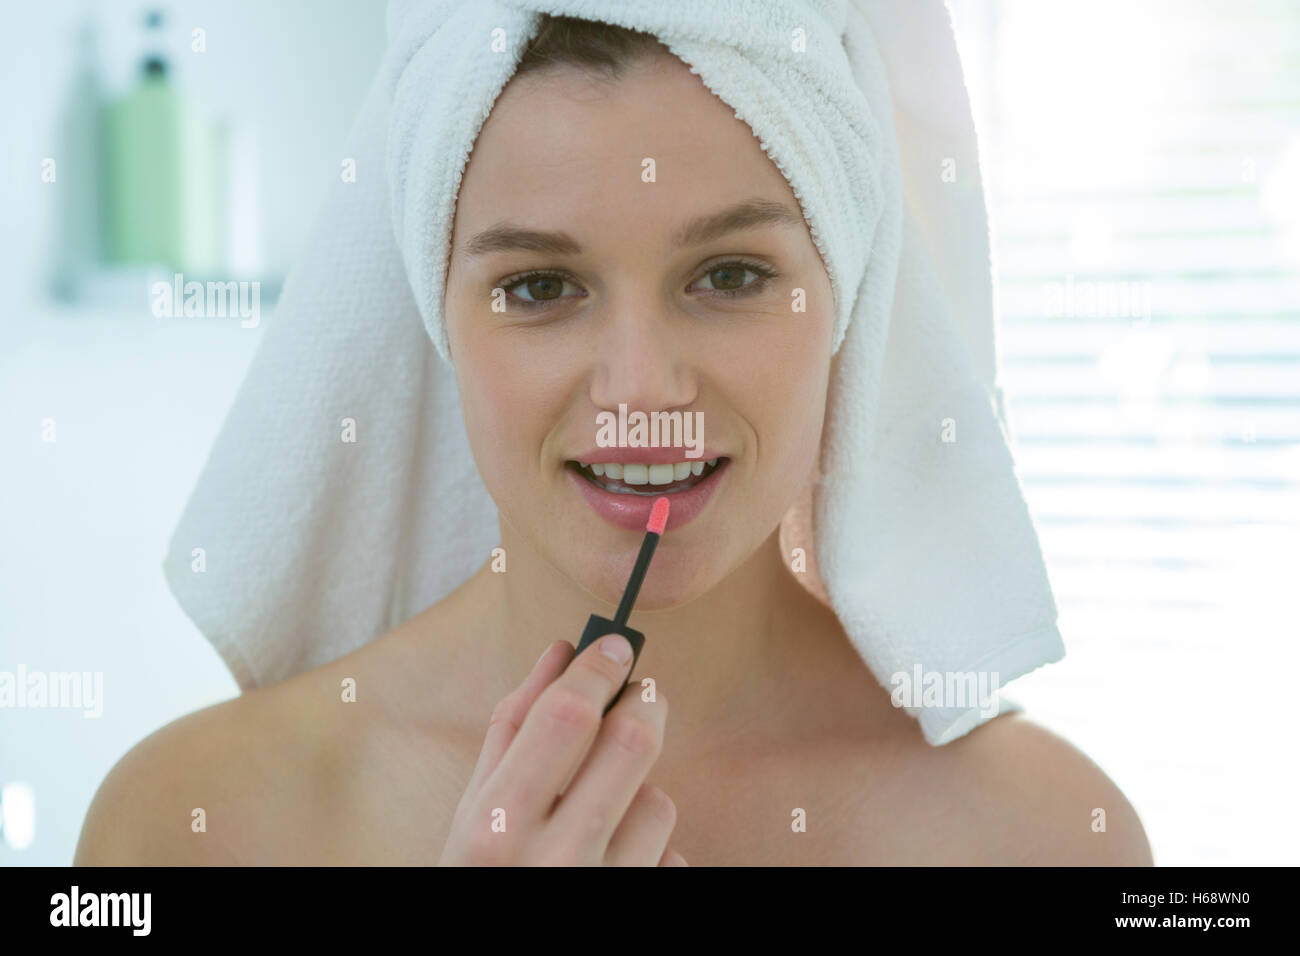 Woman applying lip gloss on her lips in bathroom Stock Photo